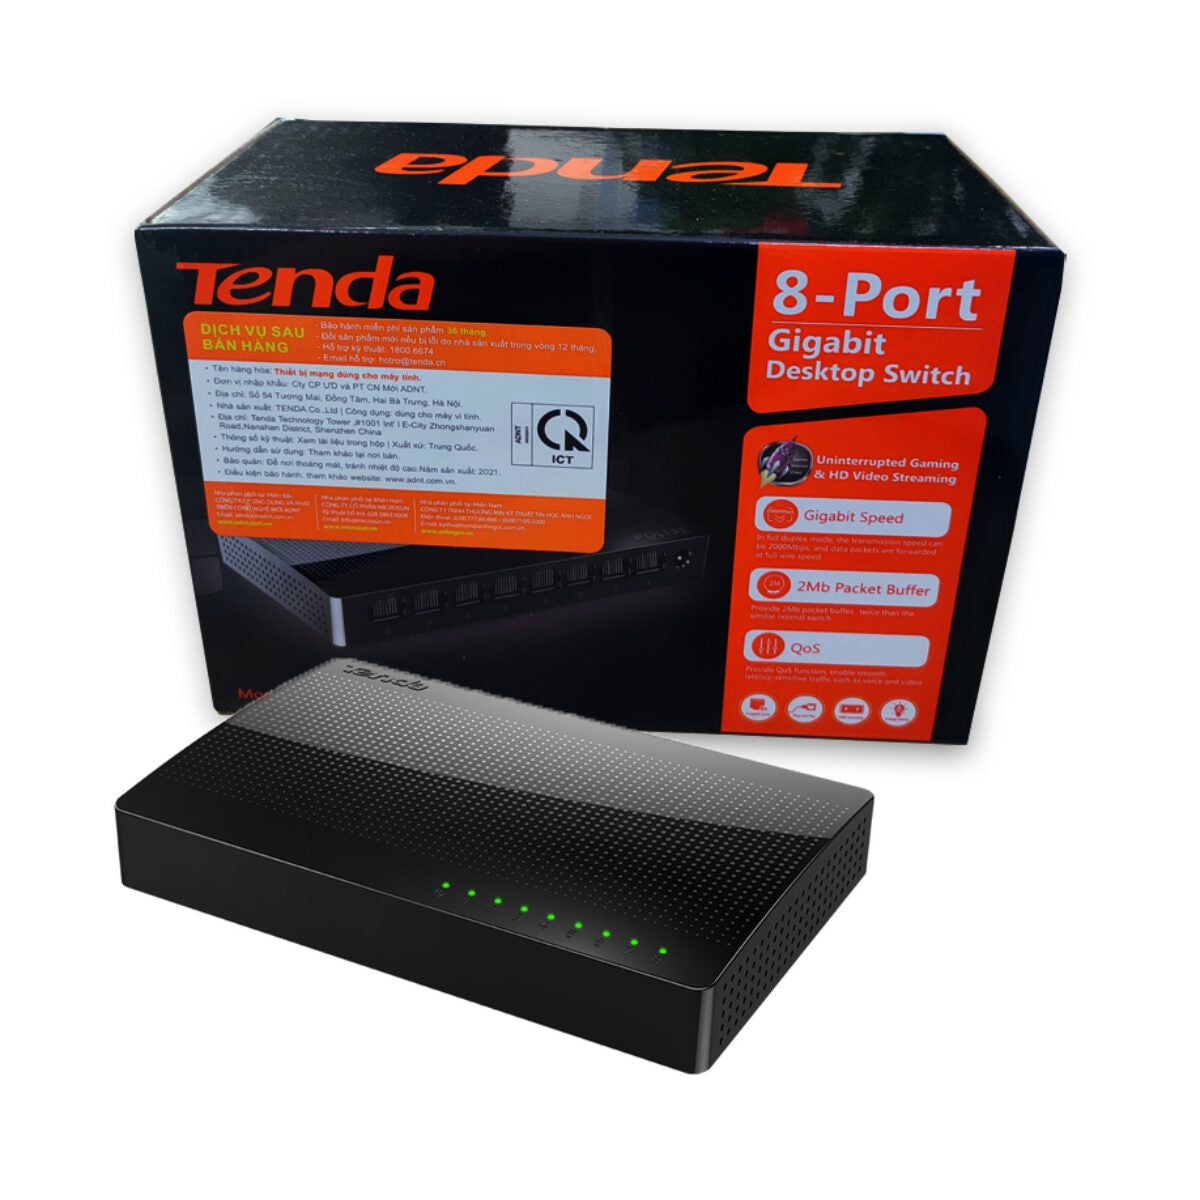 Tenda 8-Port Gigabit Ethernet Desktop Switch - SG108